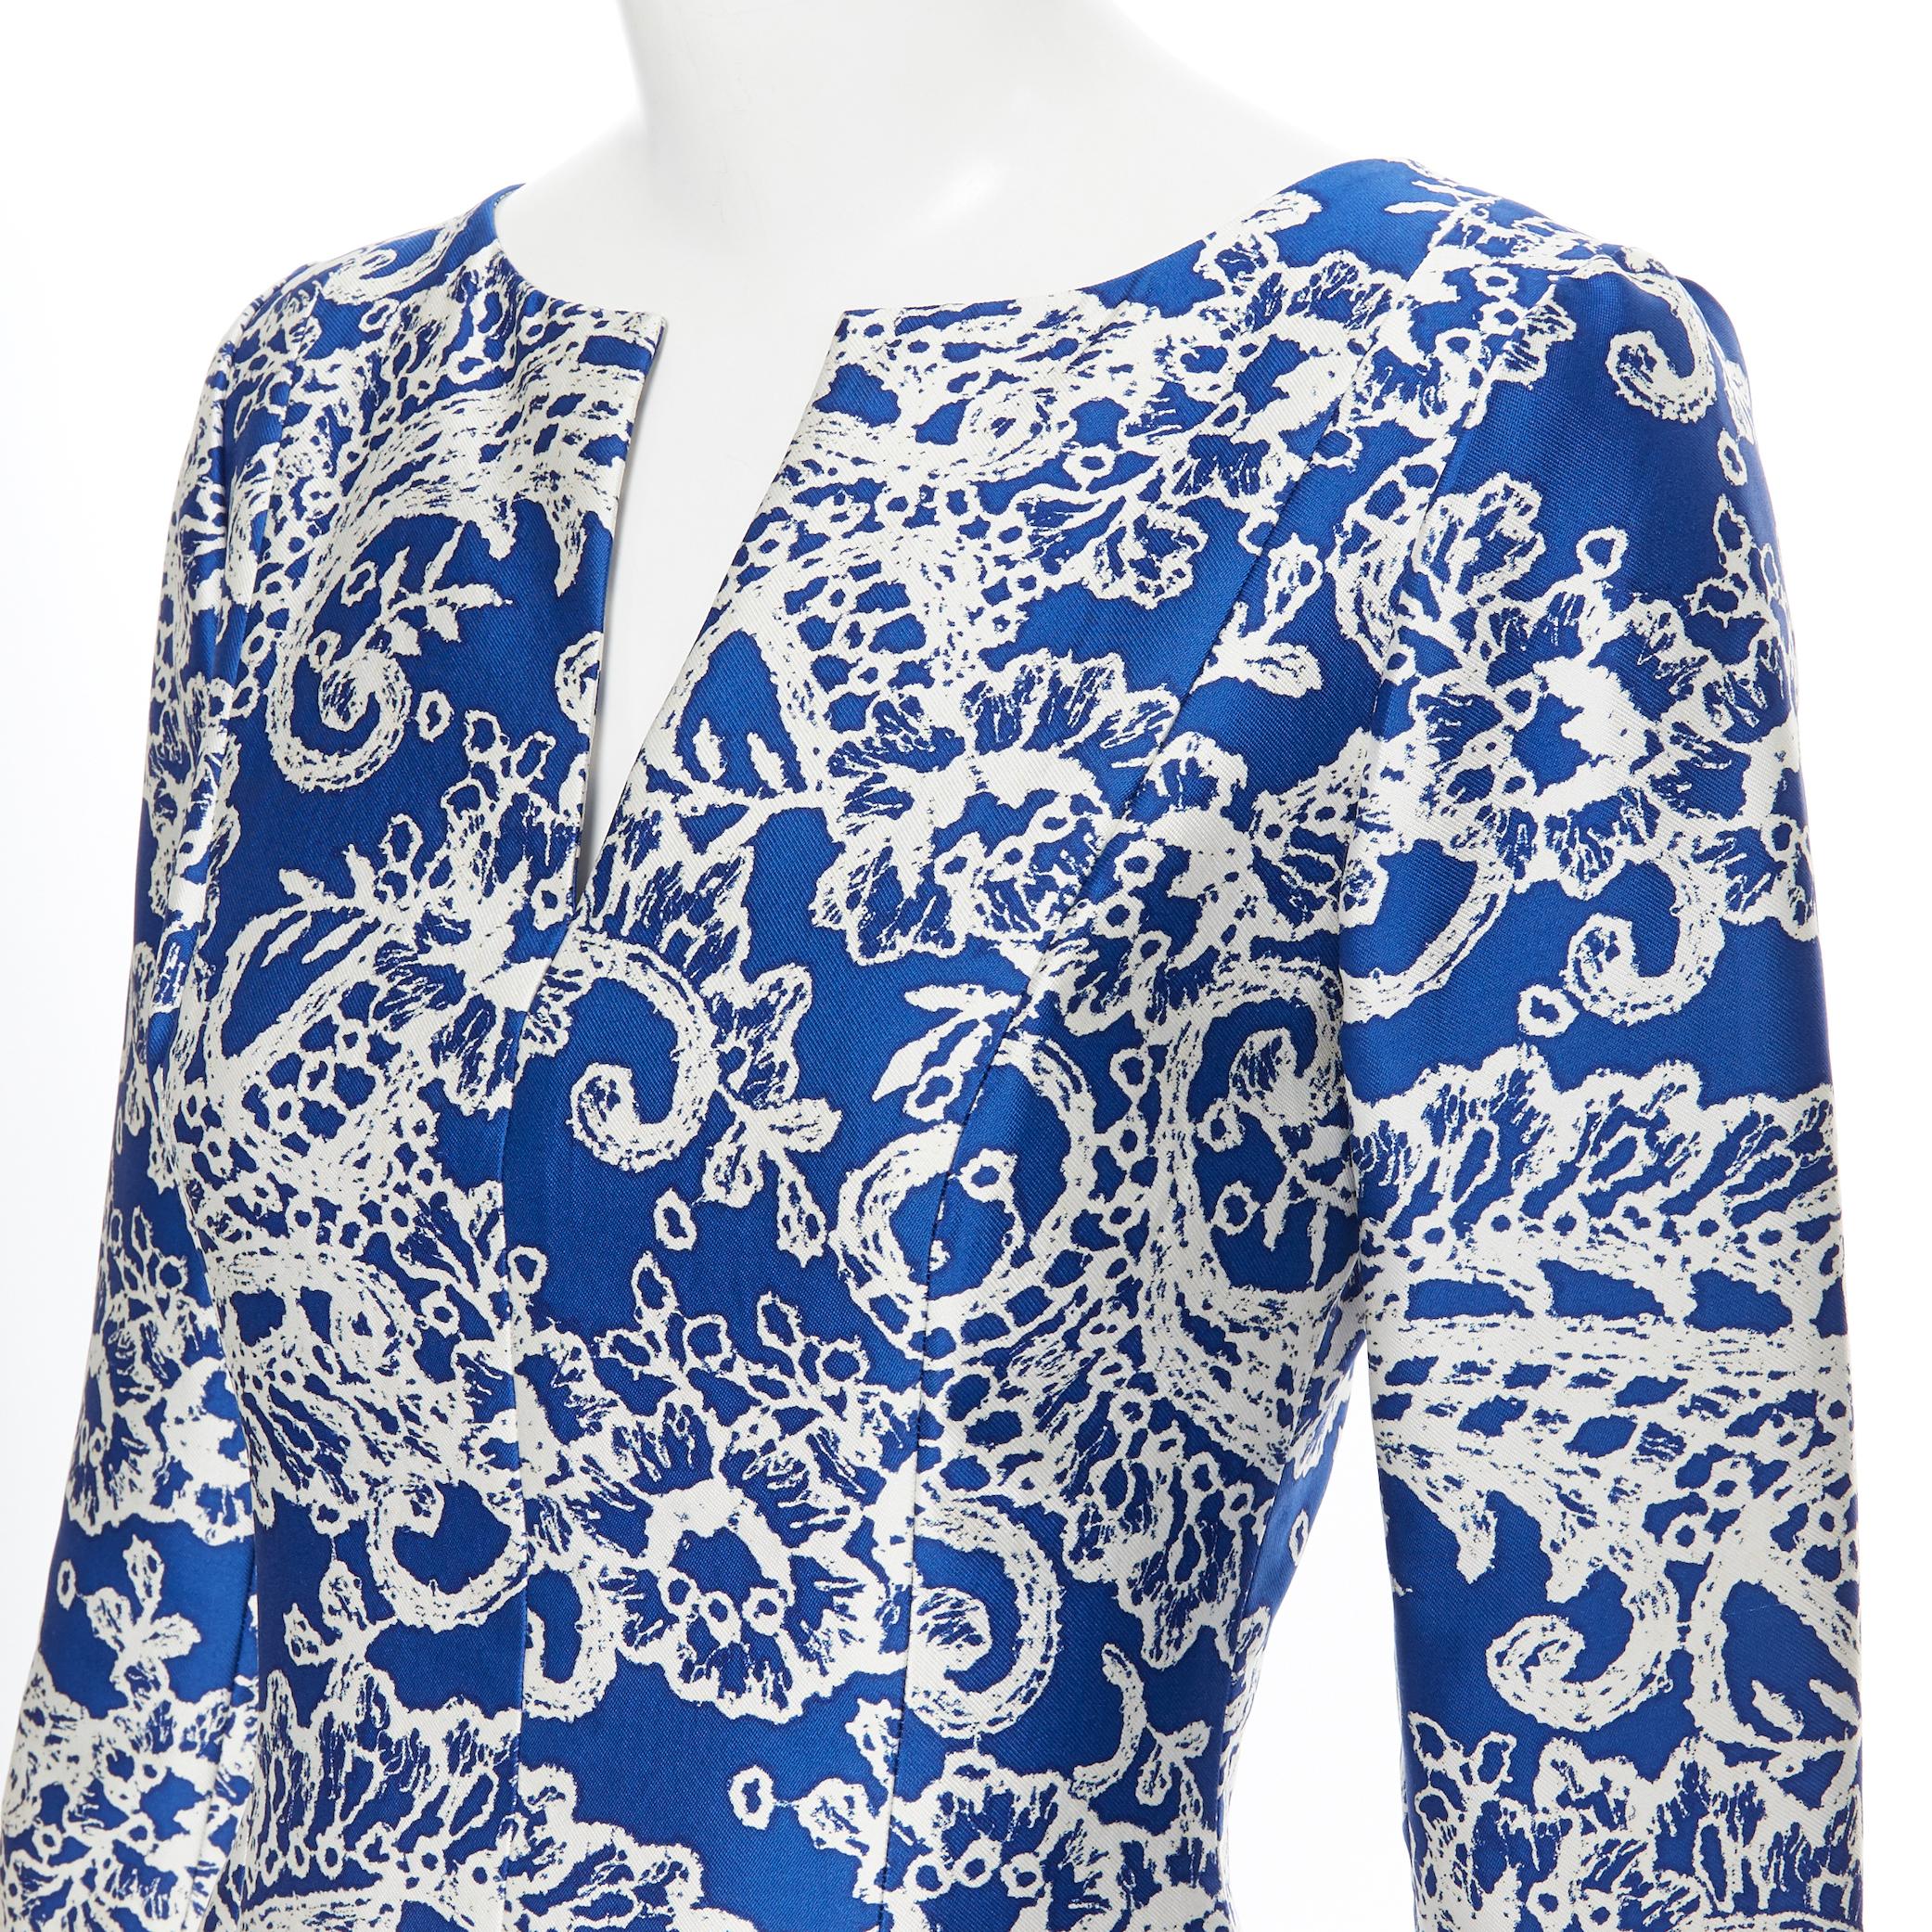 OSCAR DE LA RENTA SS14 blue white baroque print V-neck dual pocket dress US0 XS
Brand: Oscar De La Renta
Designer: Oscar De La Renta
Collection: Spring Summer 2014
Model Name / Style: Cocktail dress
Material: Cotton, silk
Color: Blue, white
Pattern: